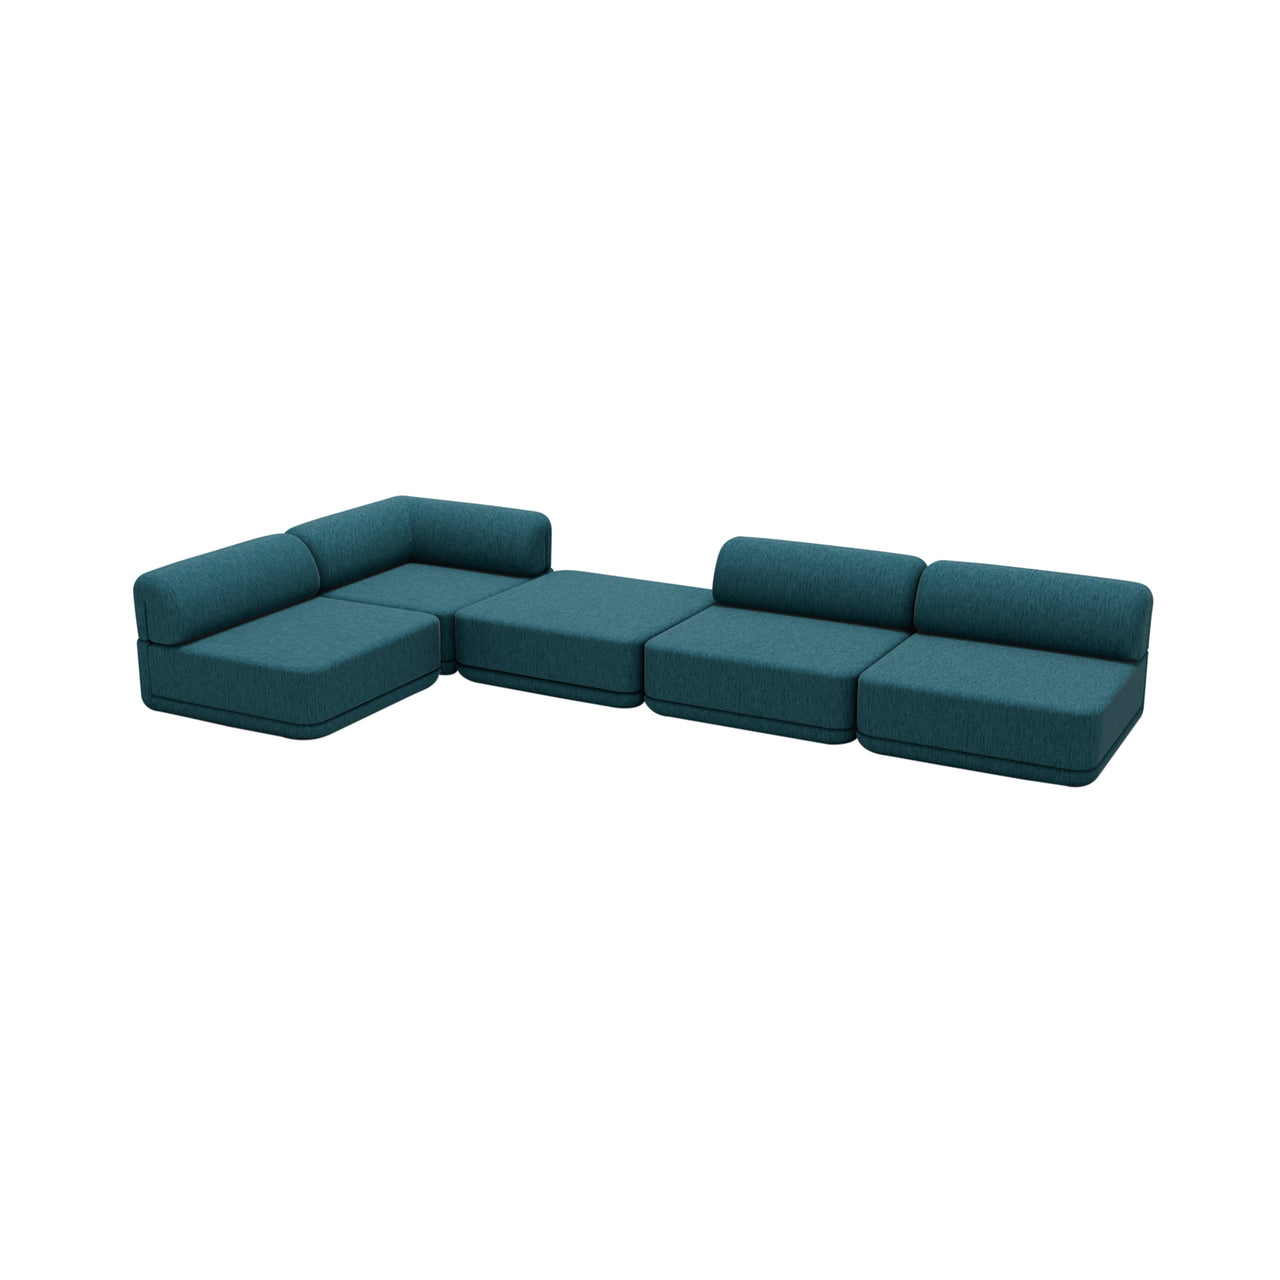 Cube Modular Sofa: Configuration 10 + Chenille Teal